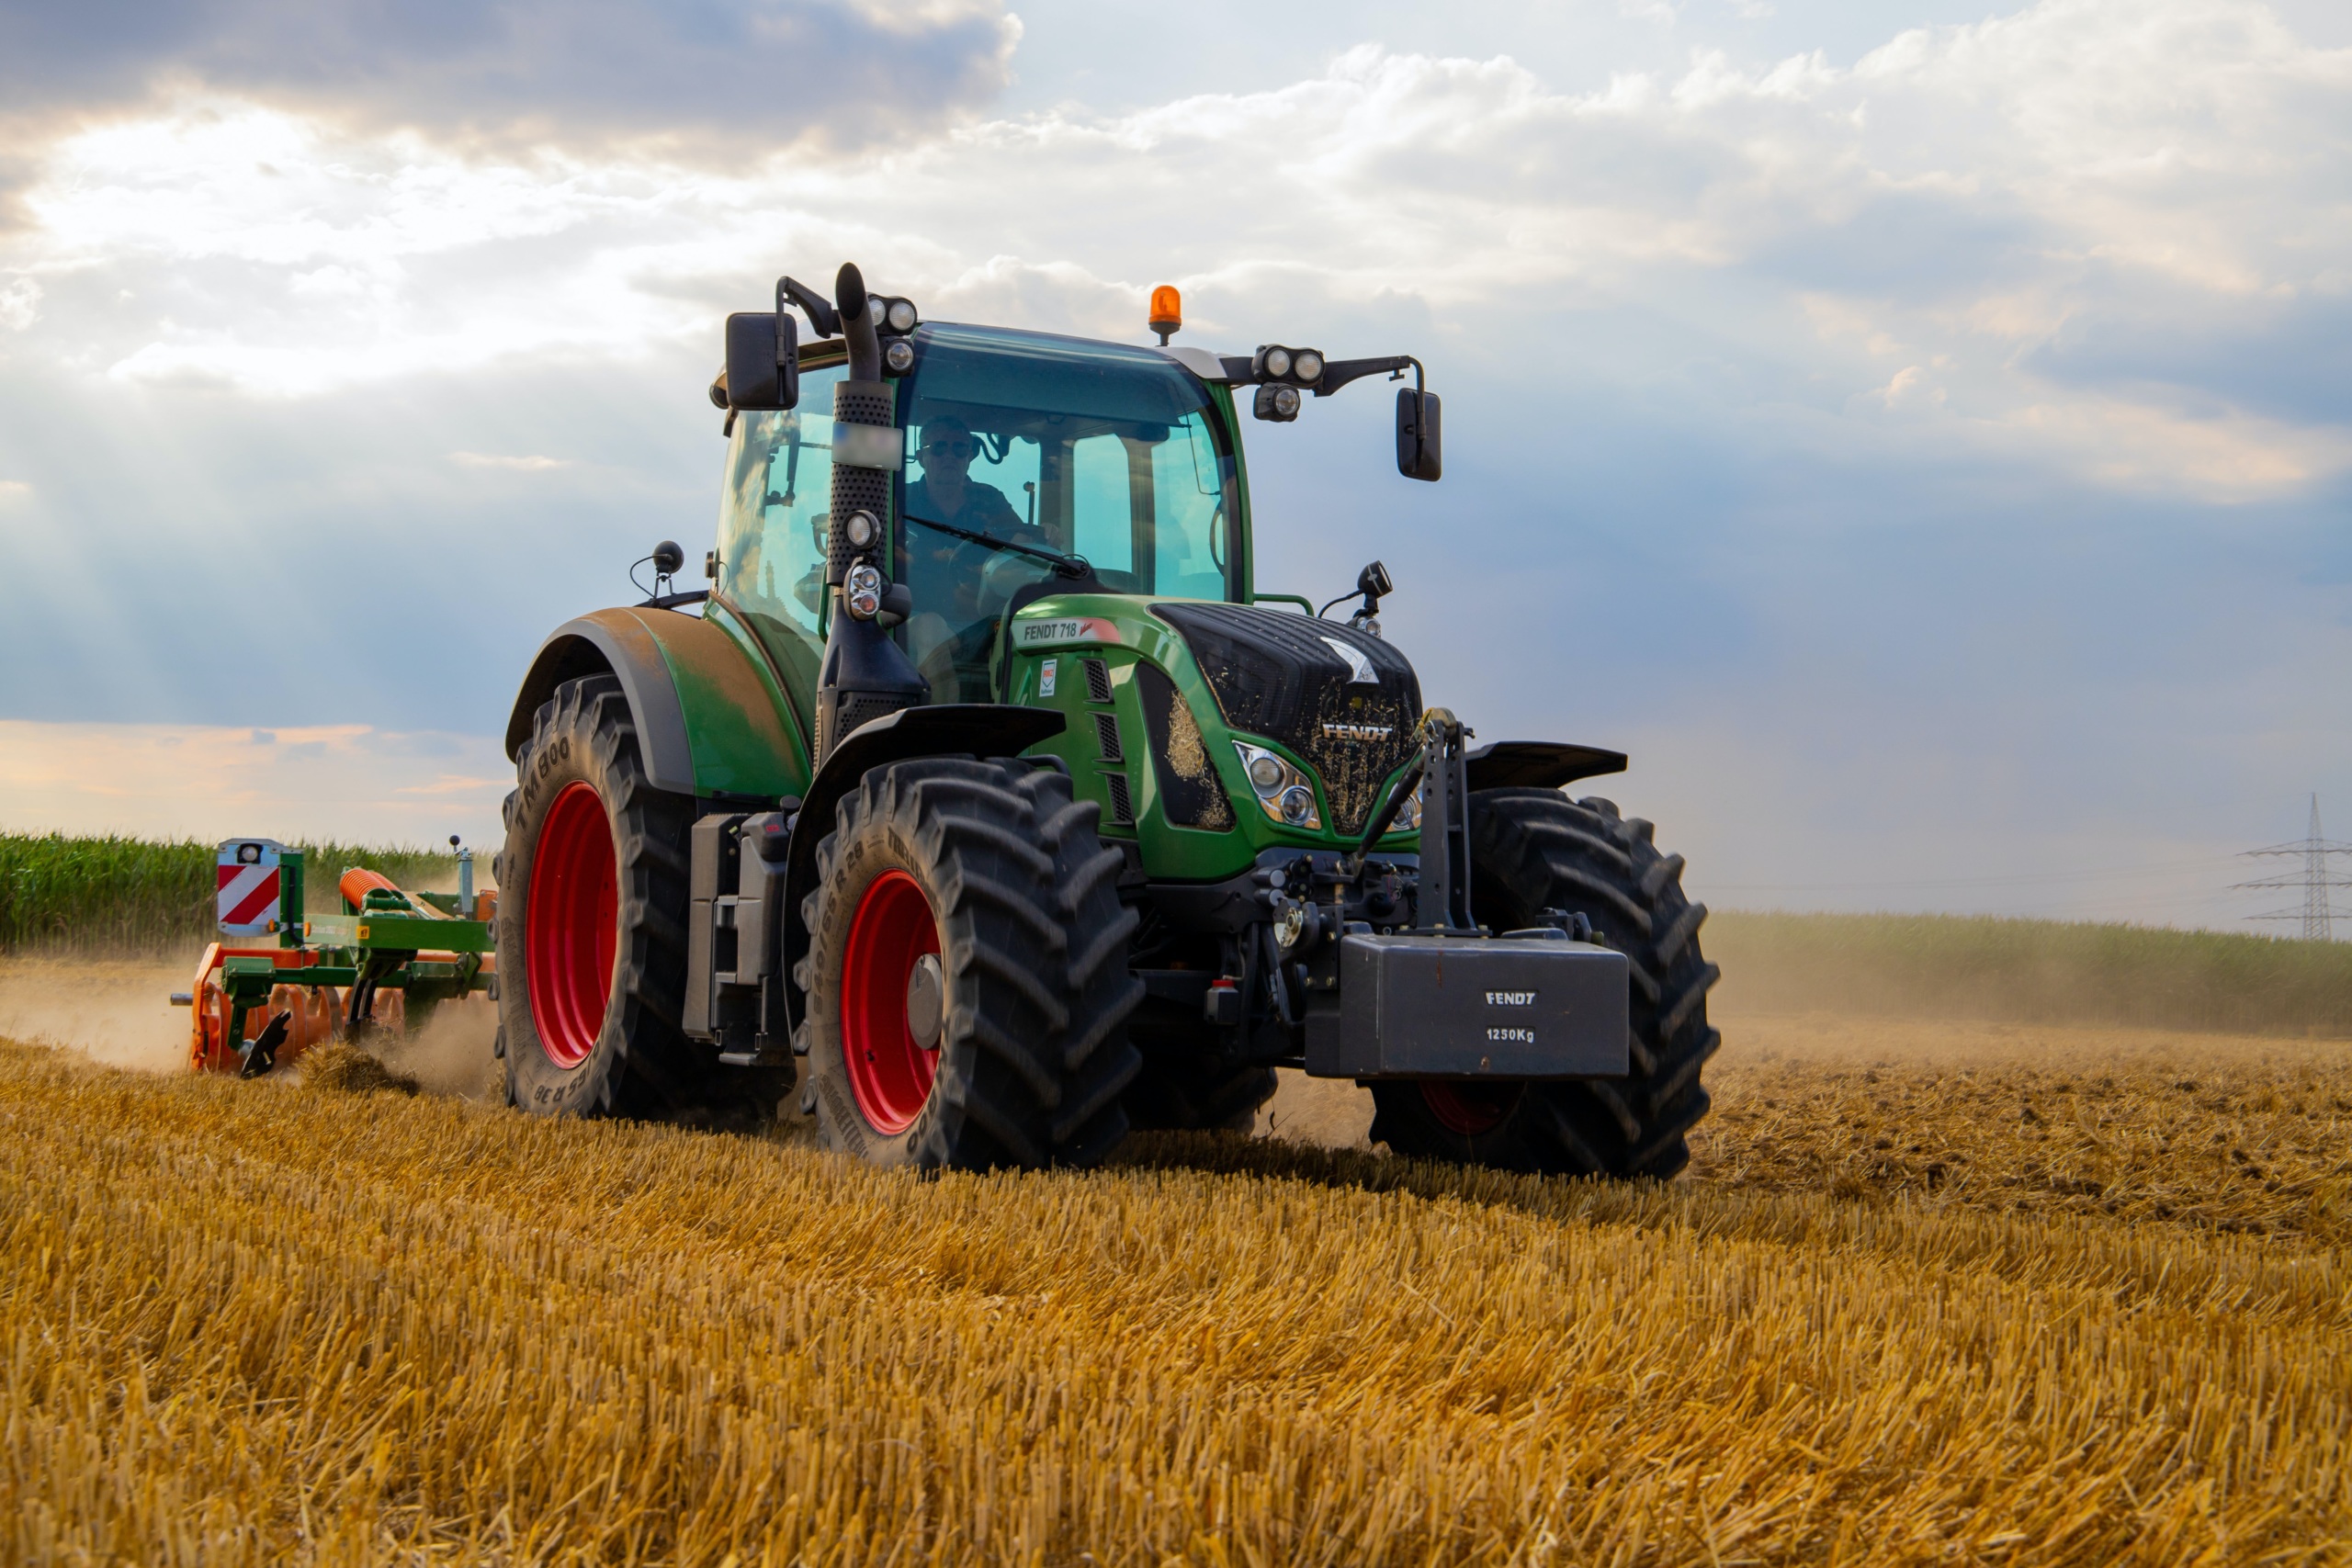 A green tractor drives through a field